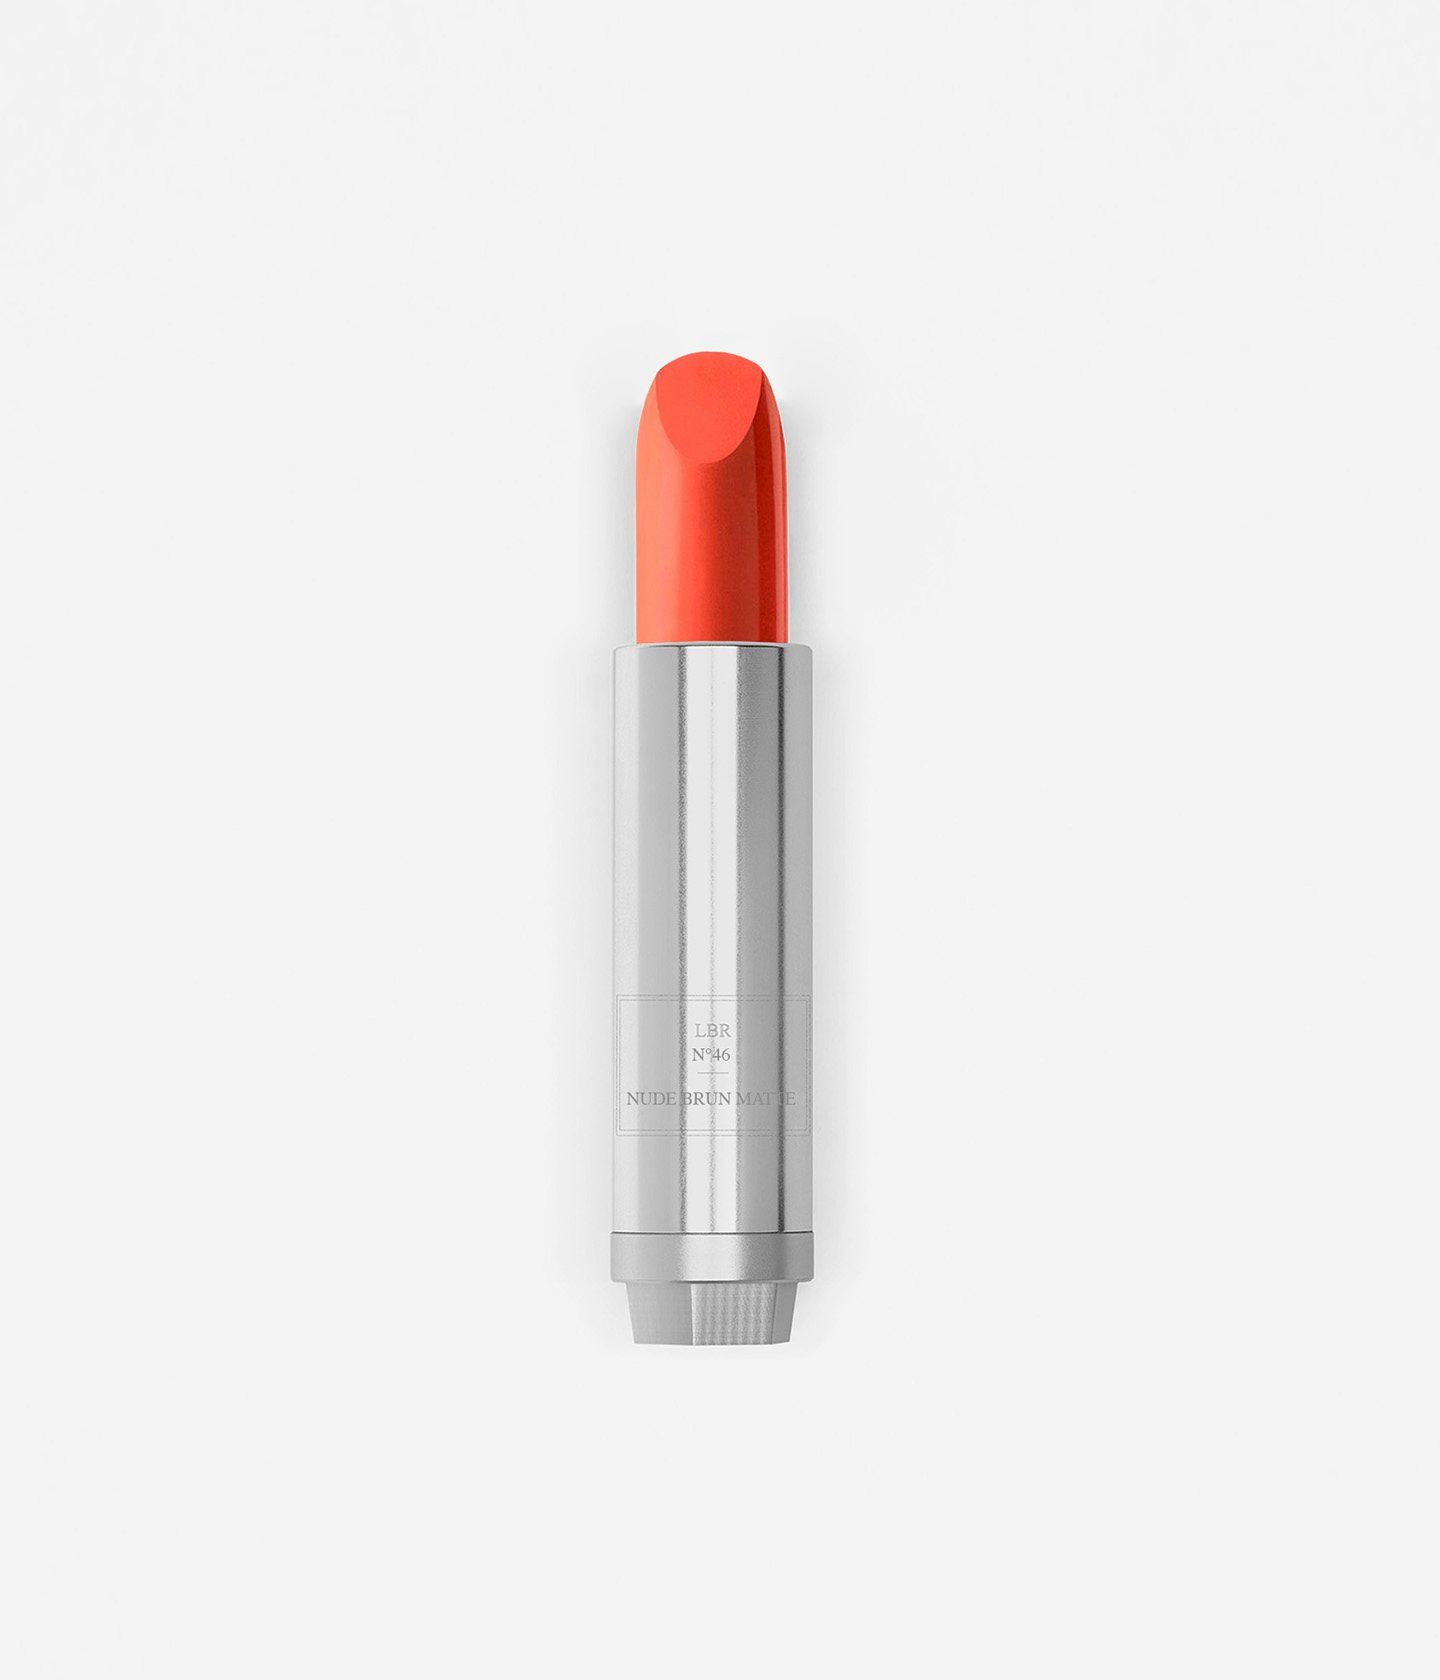 La bouche rouge Nude Brun Matte lipstick in metal refill